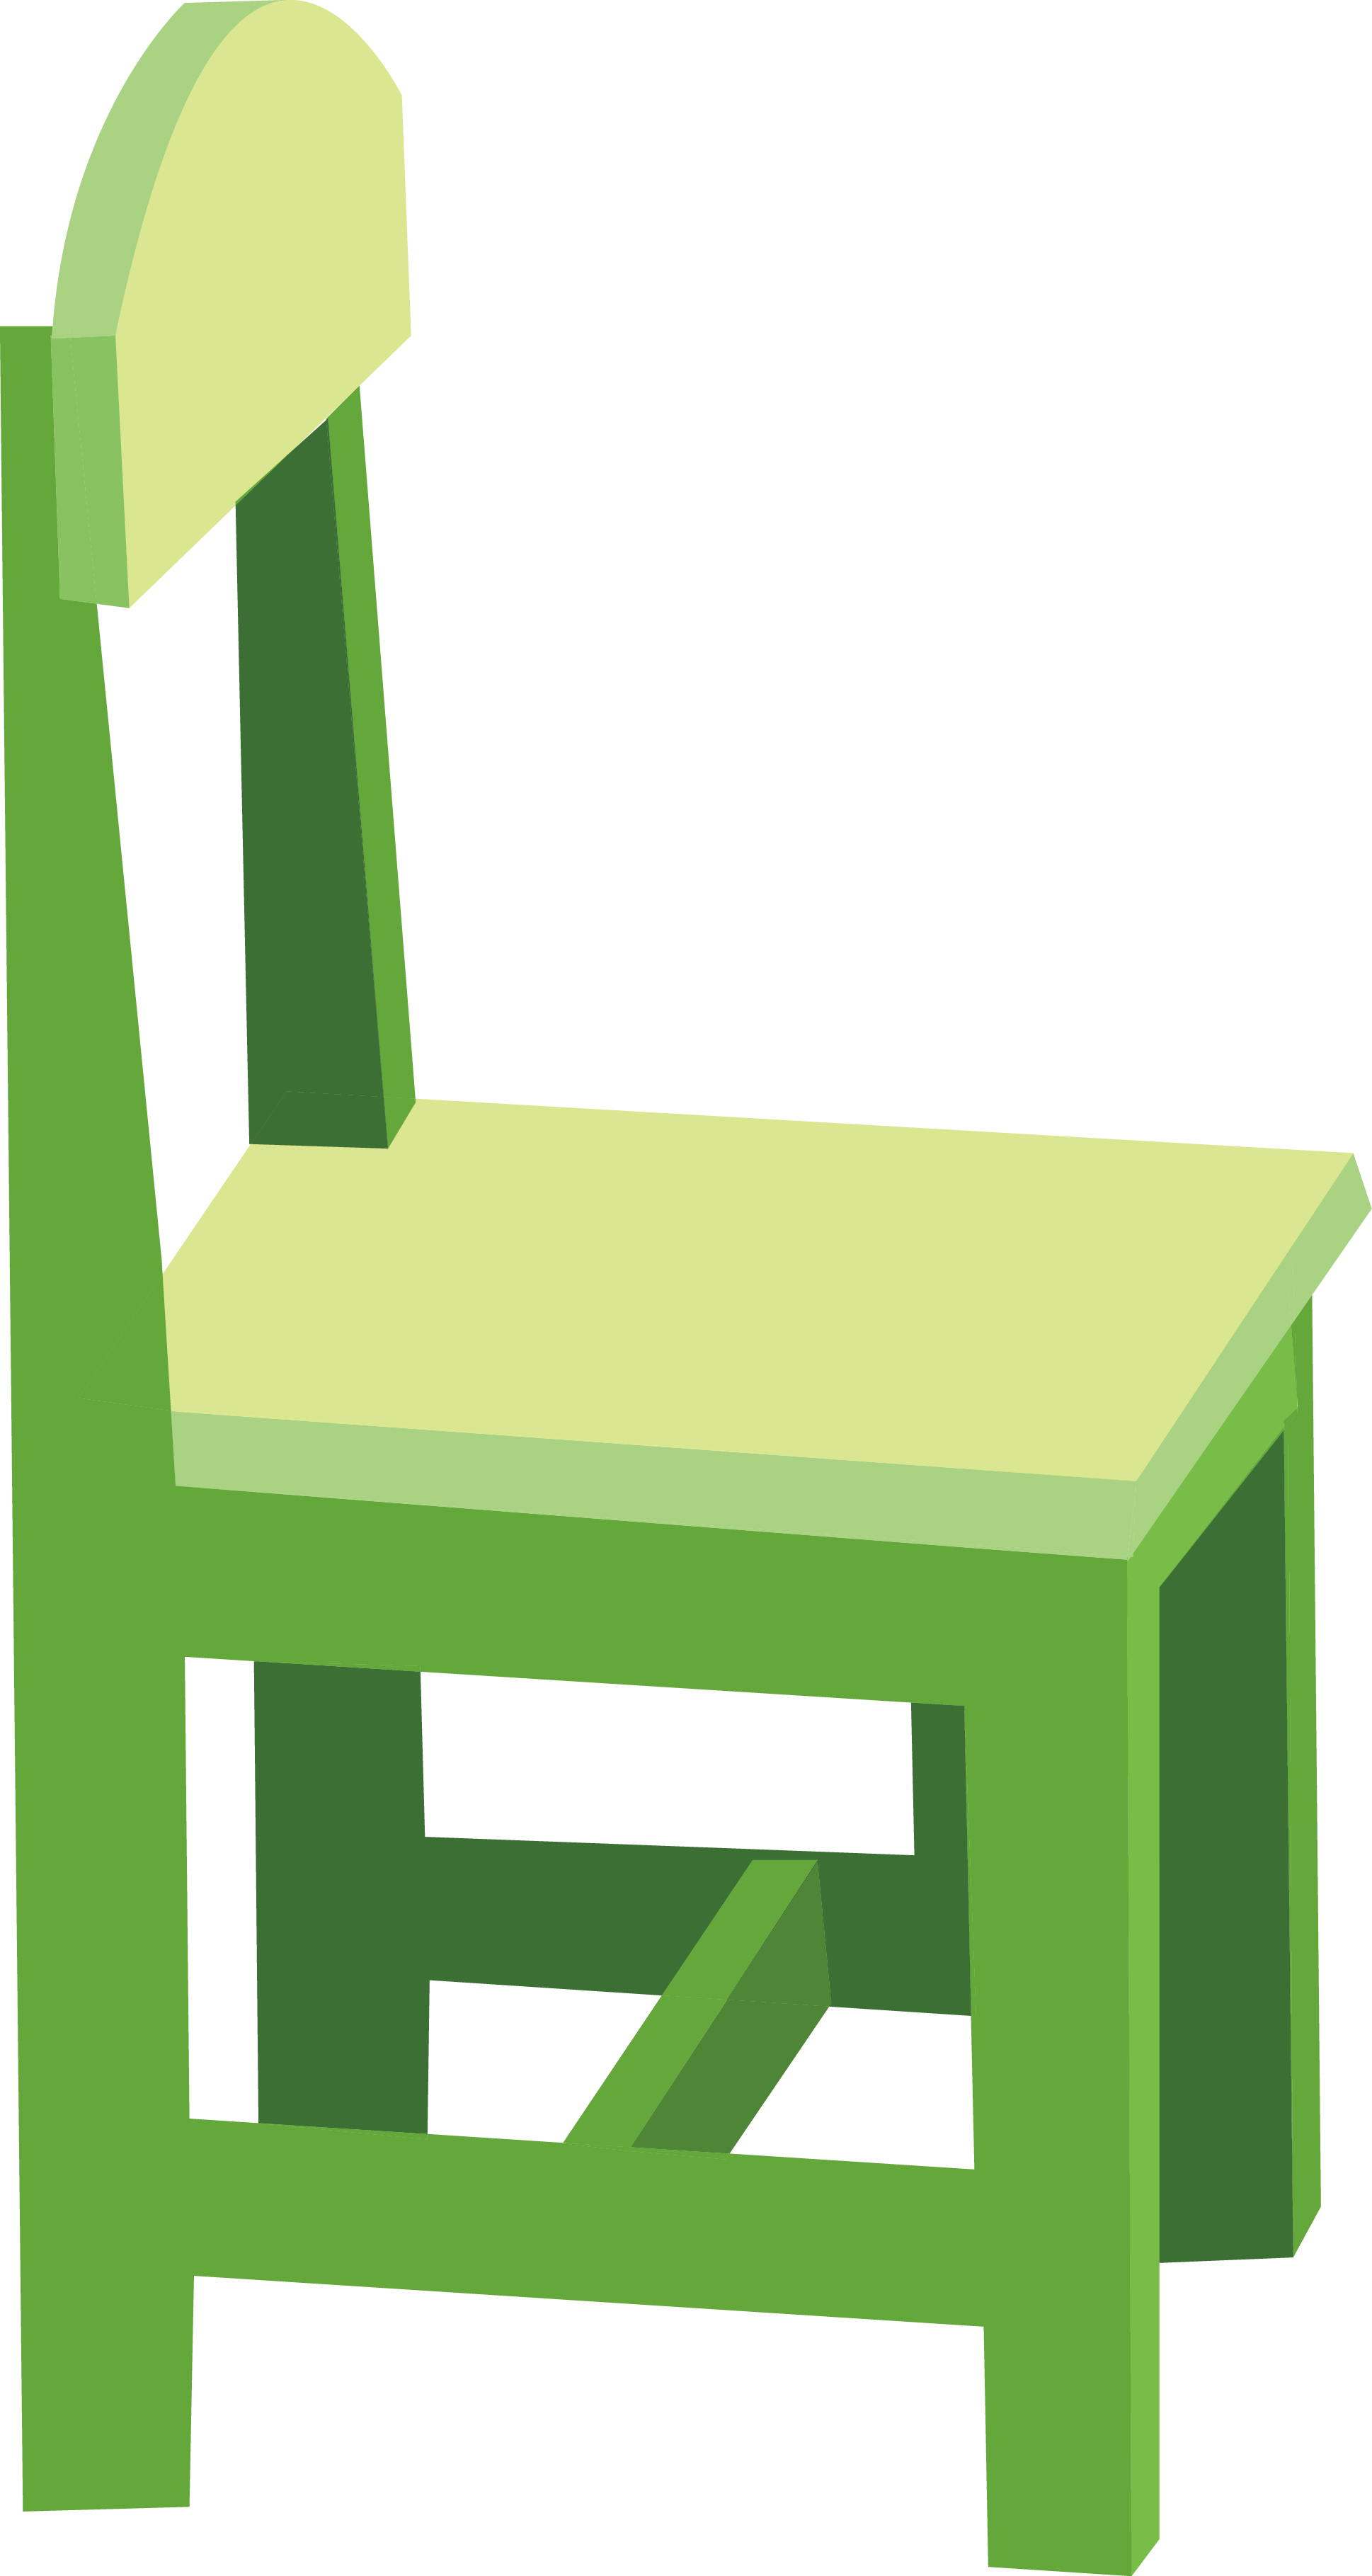 Table Chair Stool - Table Chair Stool (1938x3638)